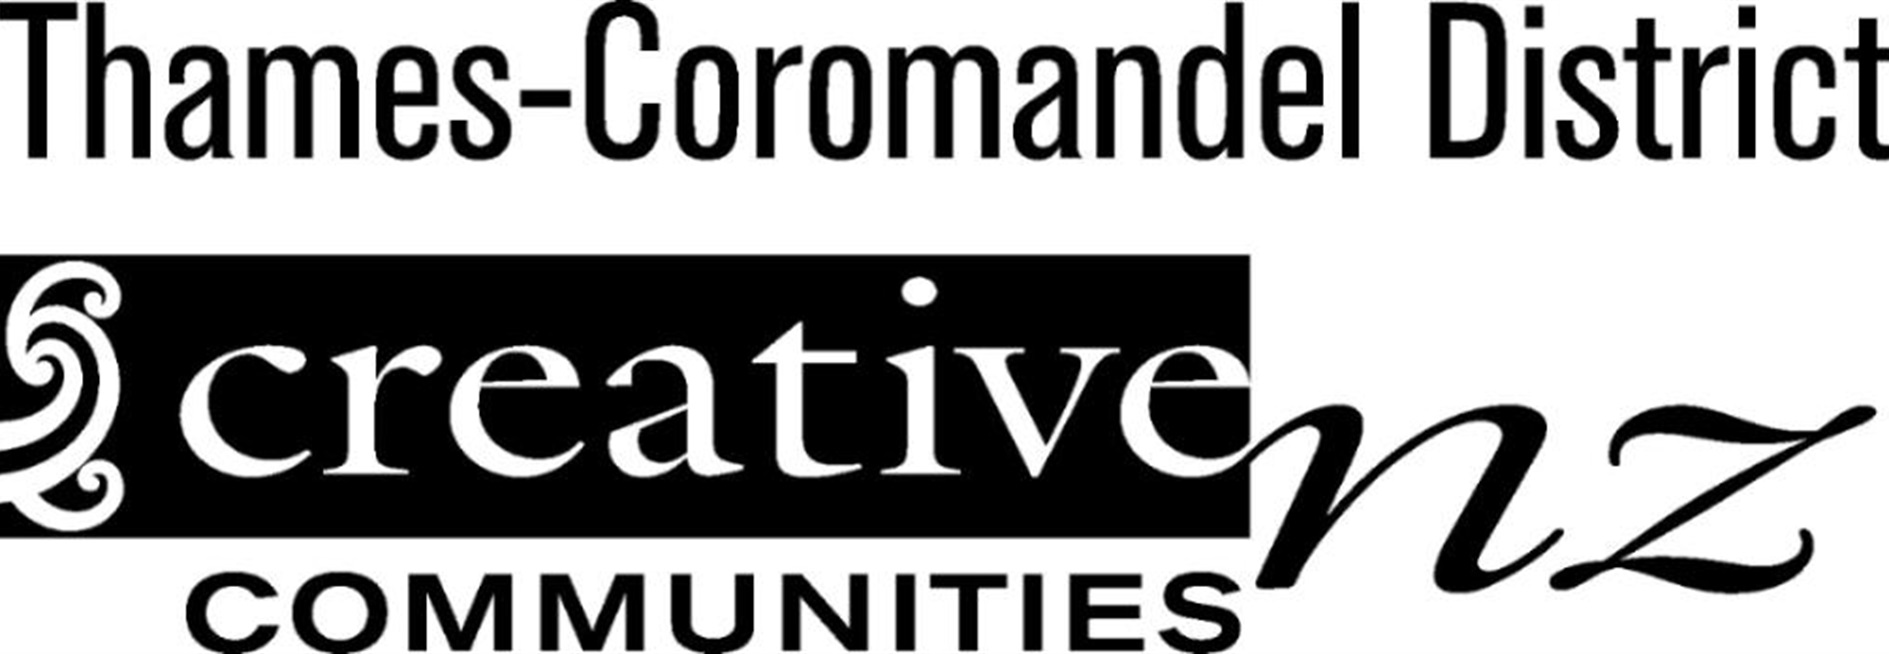 Creative Communities and TCDC logo